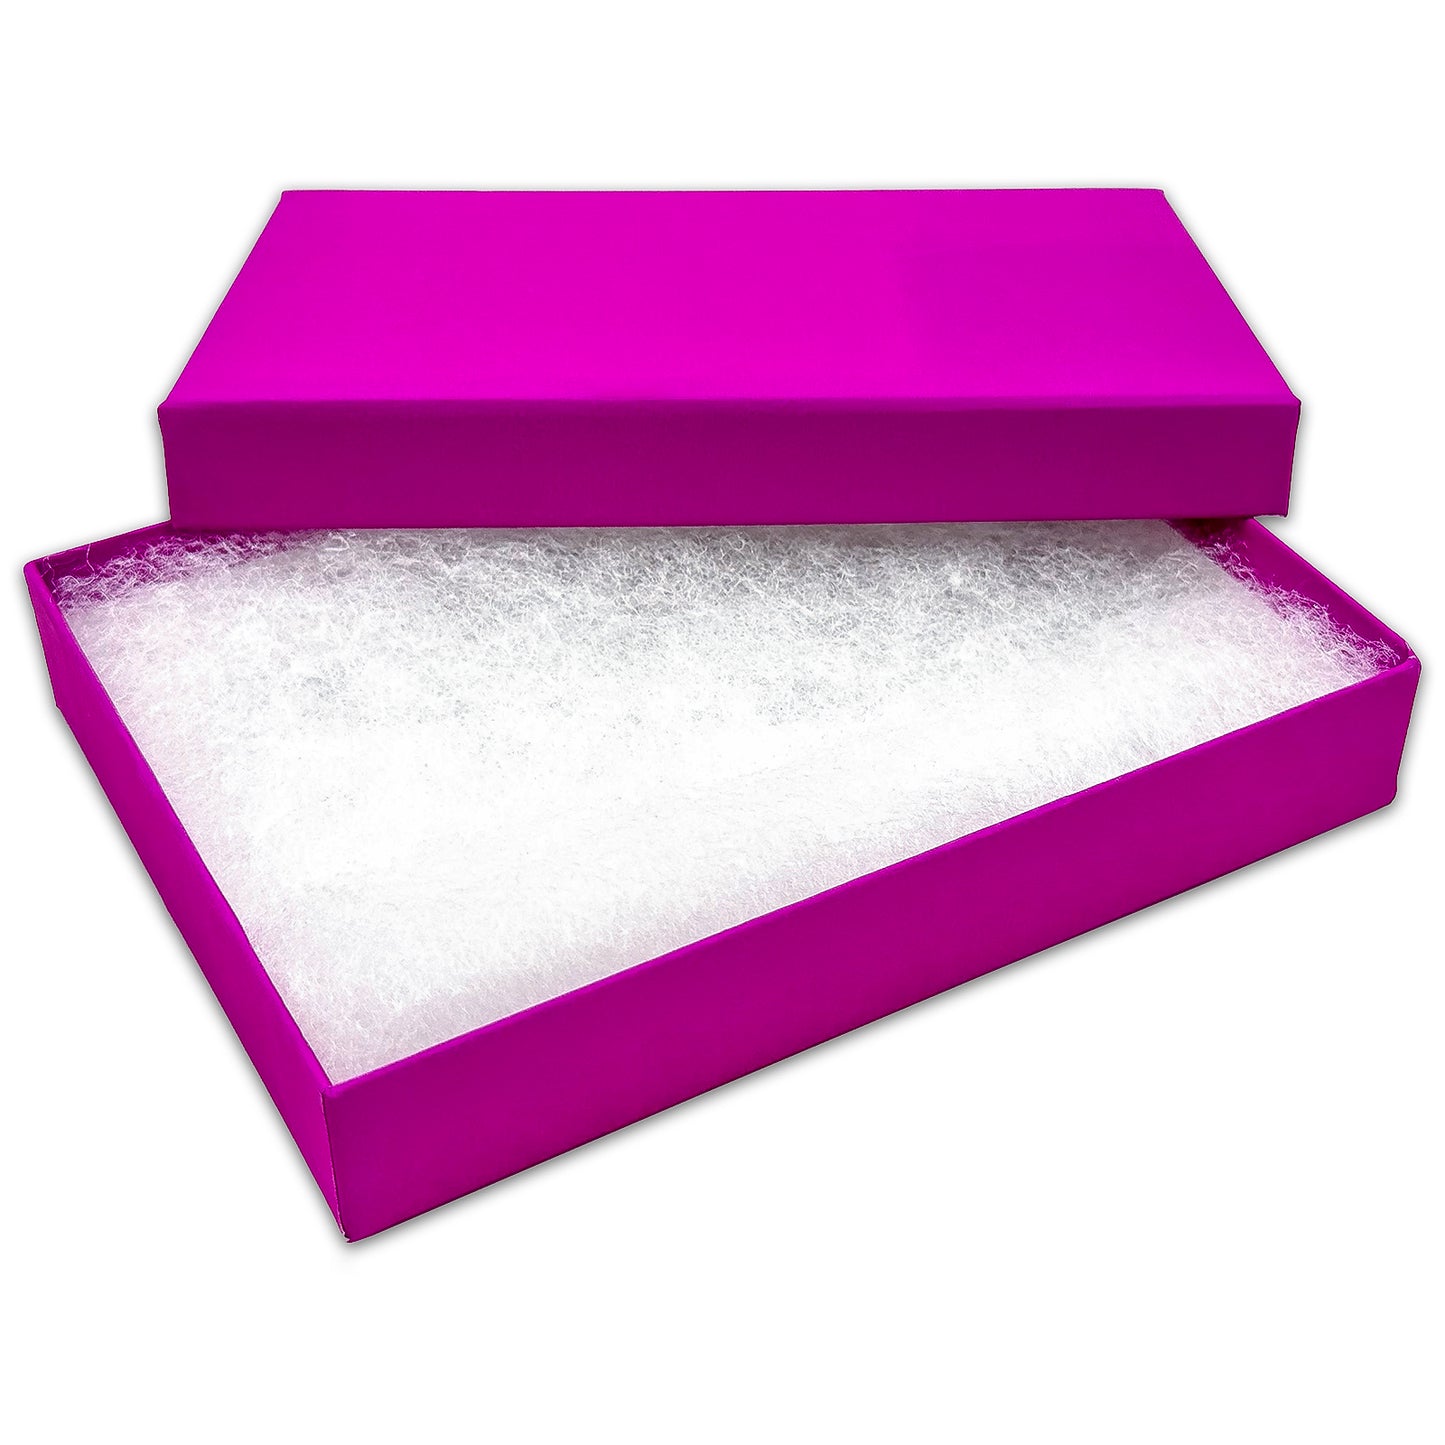 5 7/16" x 3 15/16" x 1" Neon Purple Cotton Filled Paper Box